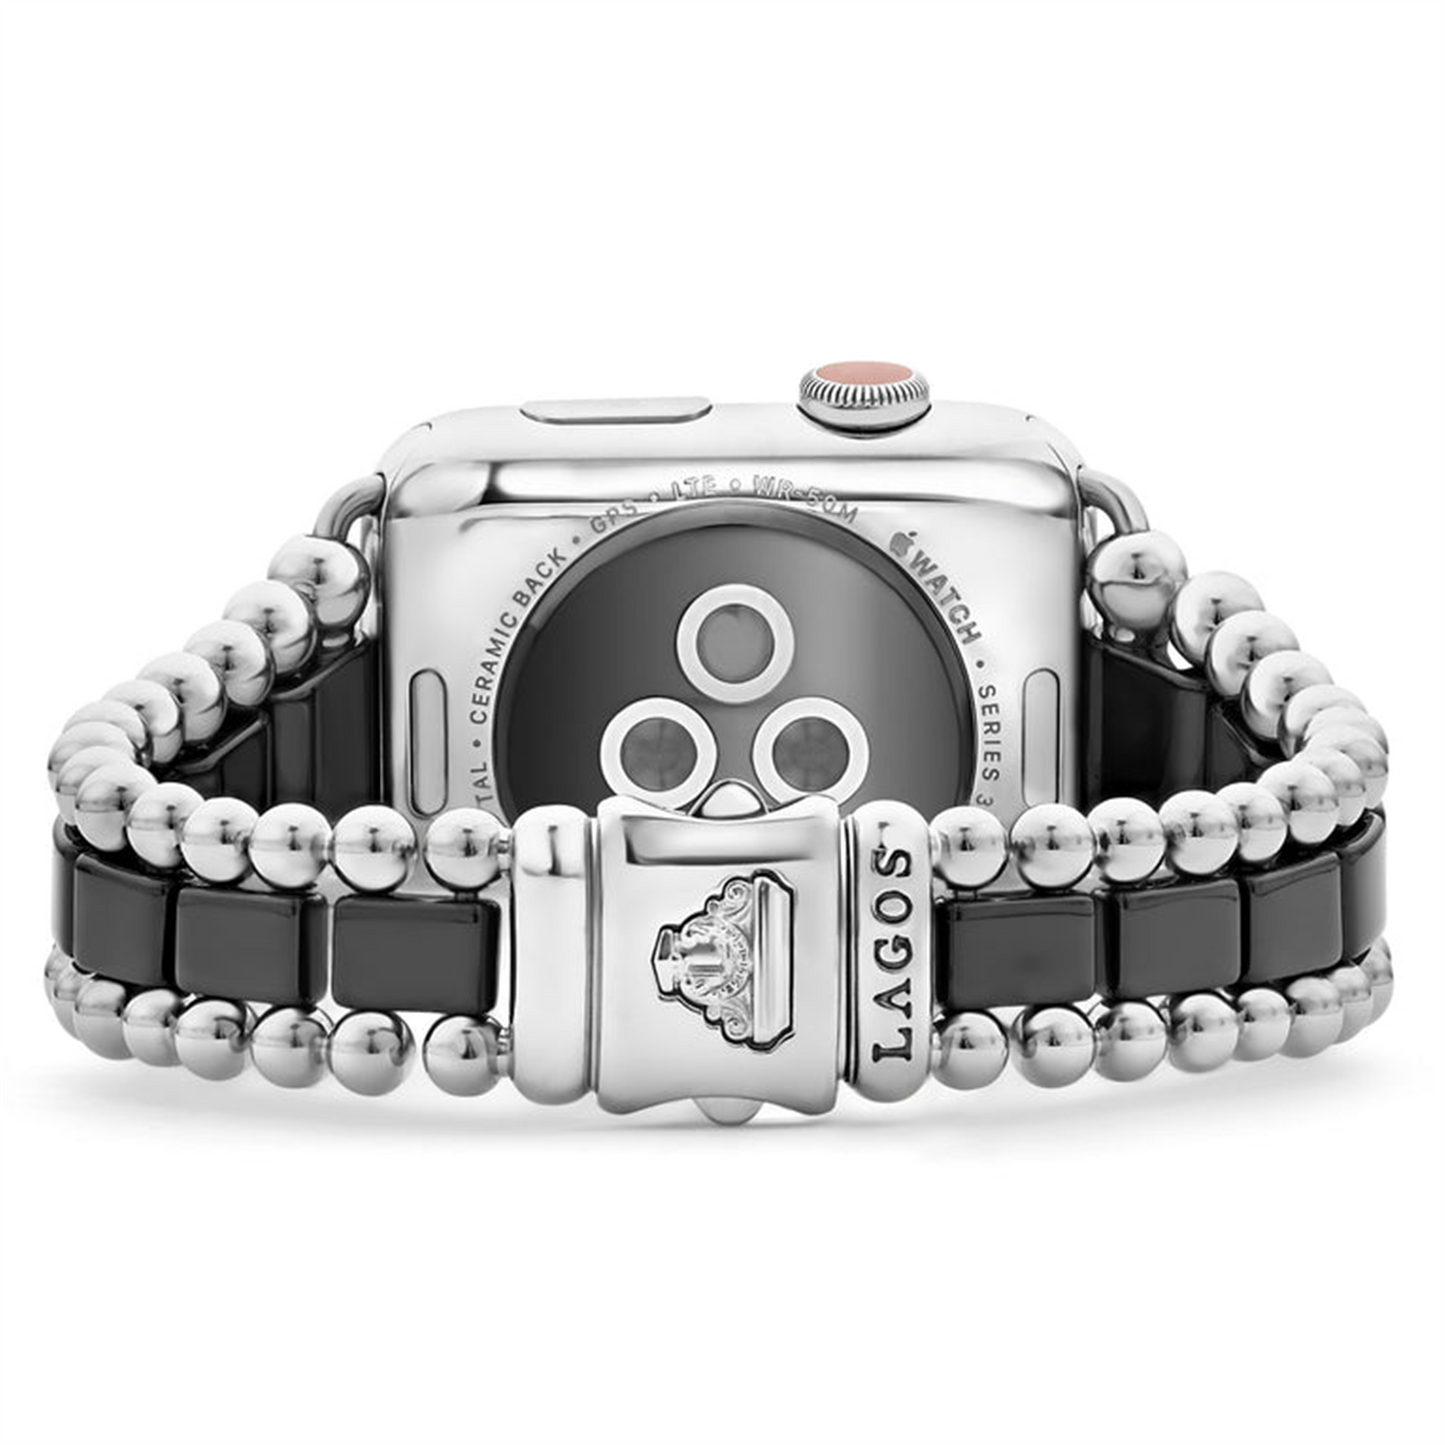 Lagos Black Ceramic & Stainless Steel Watch Bracelet - 42 - 49mm